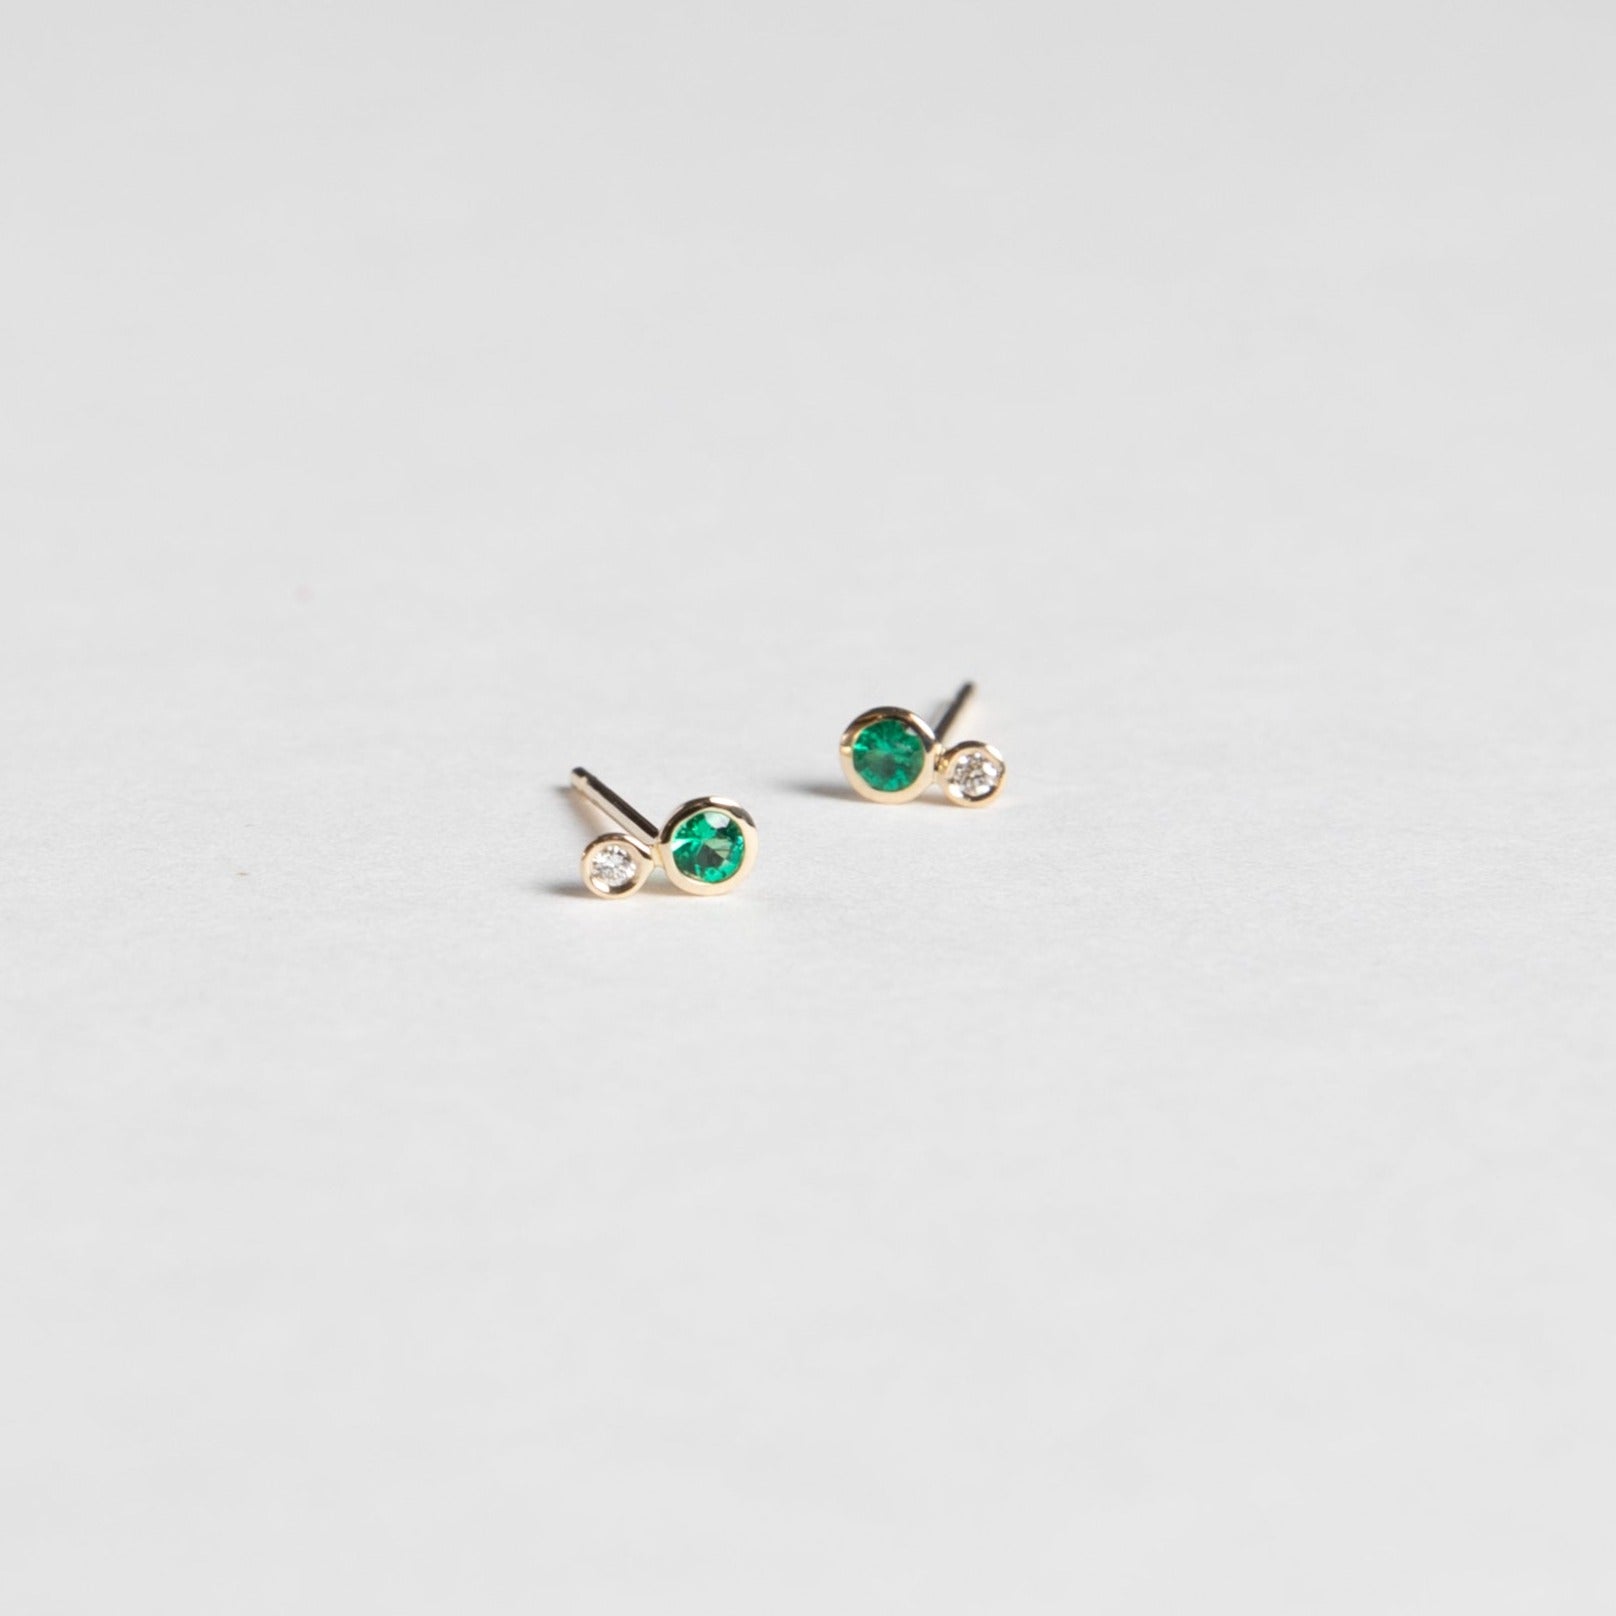 Kiki Handmade Earrings in 14k Gold set with Emeralds by SHW Fine Jewelry New York City